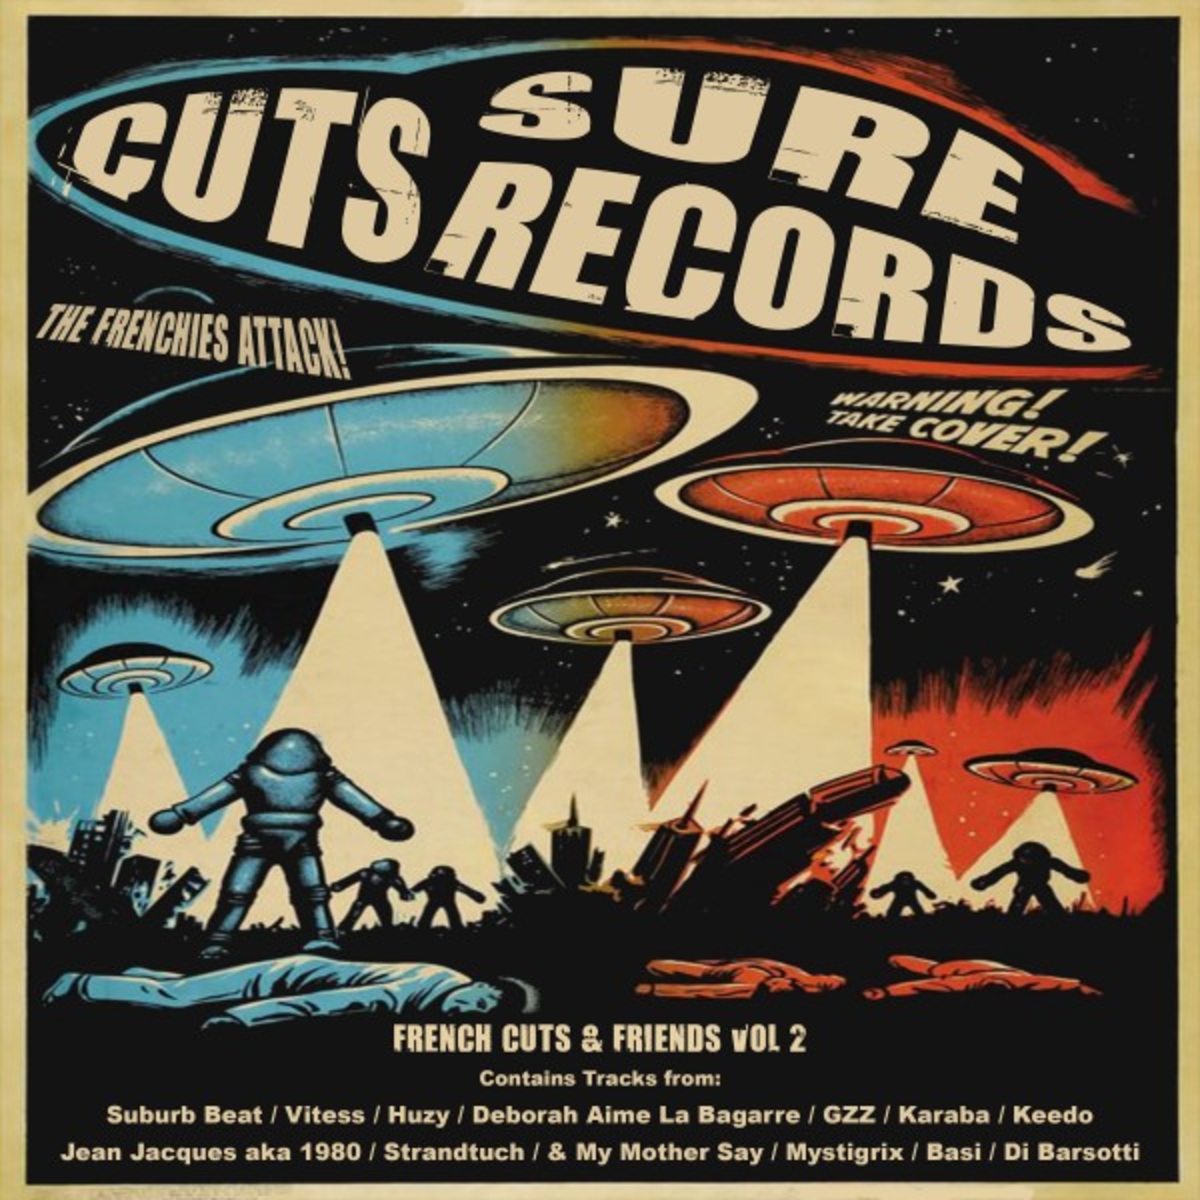 VA - French Cuts & Friends, Vol. 2 / Sure Cuts Records